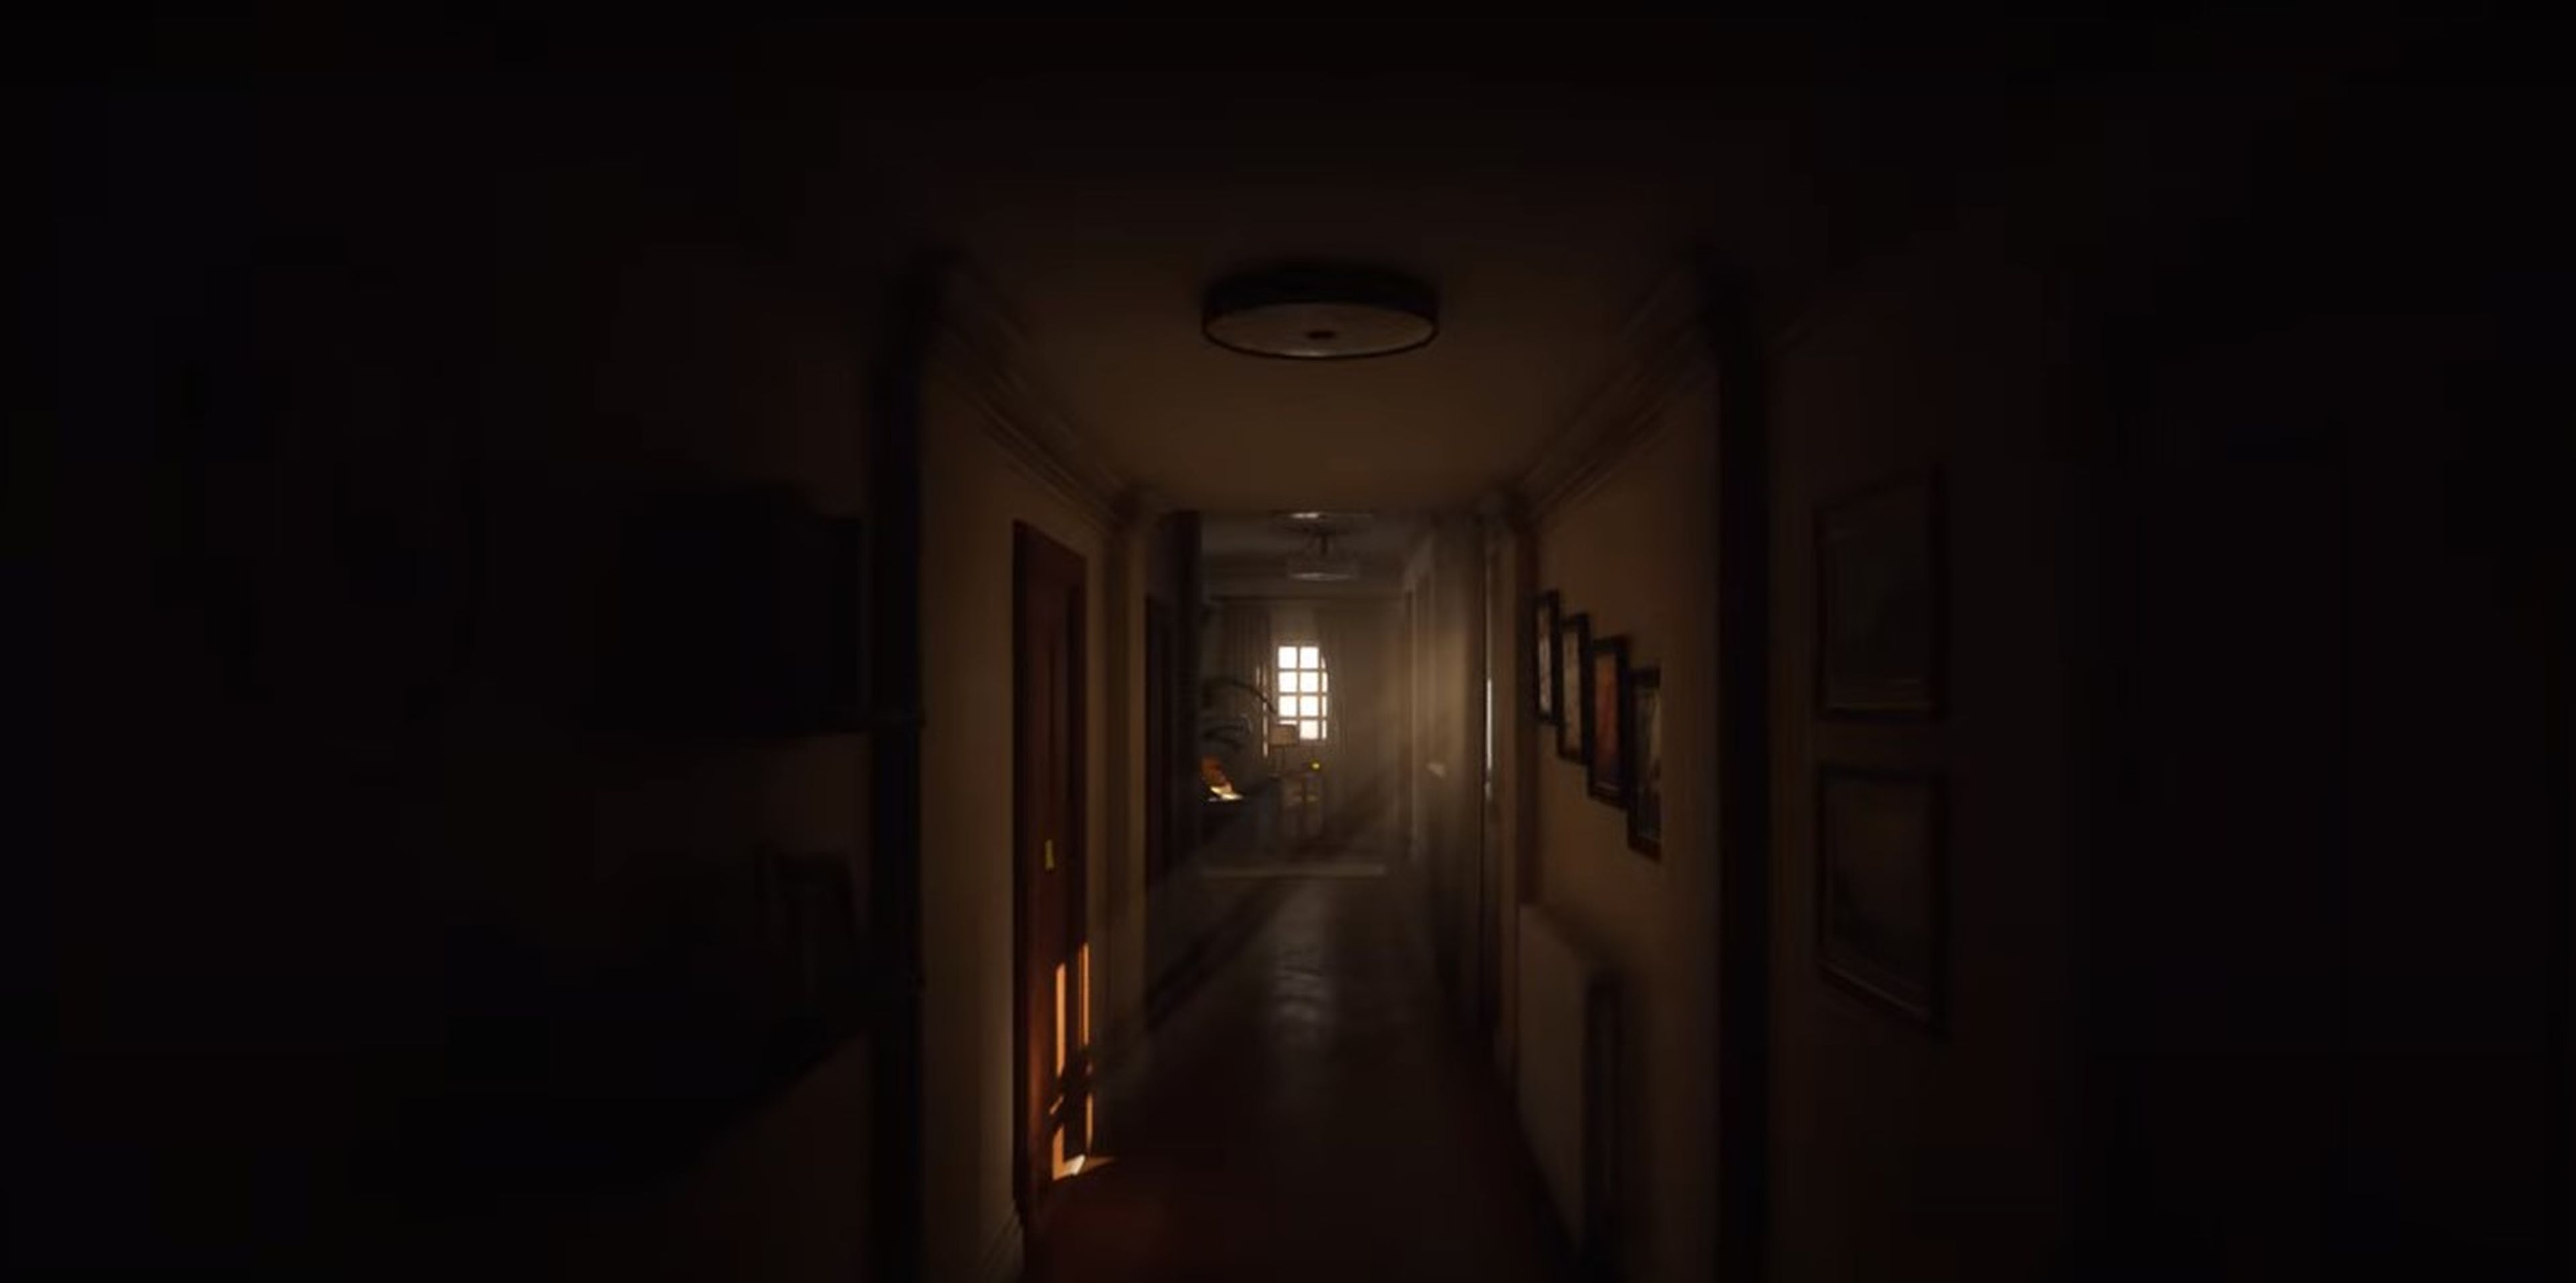 Game de terror psicológico Luto ganha novo trailer e demo para PC